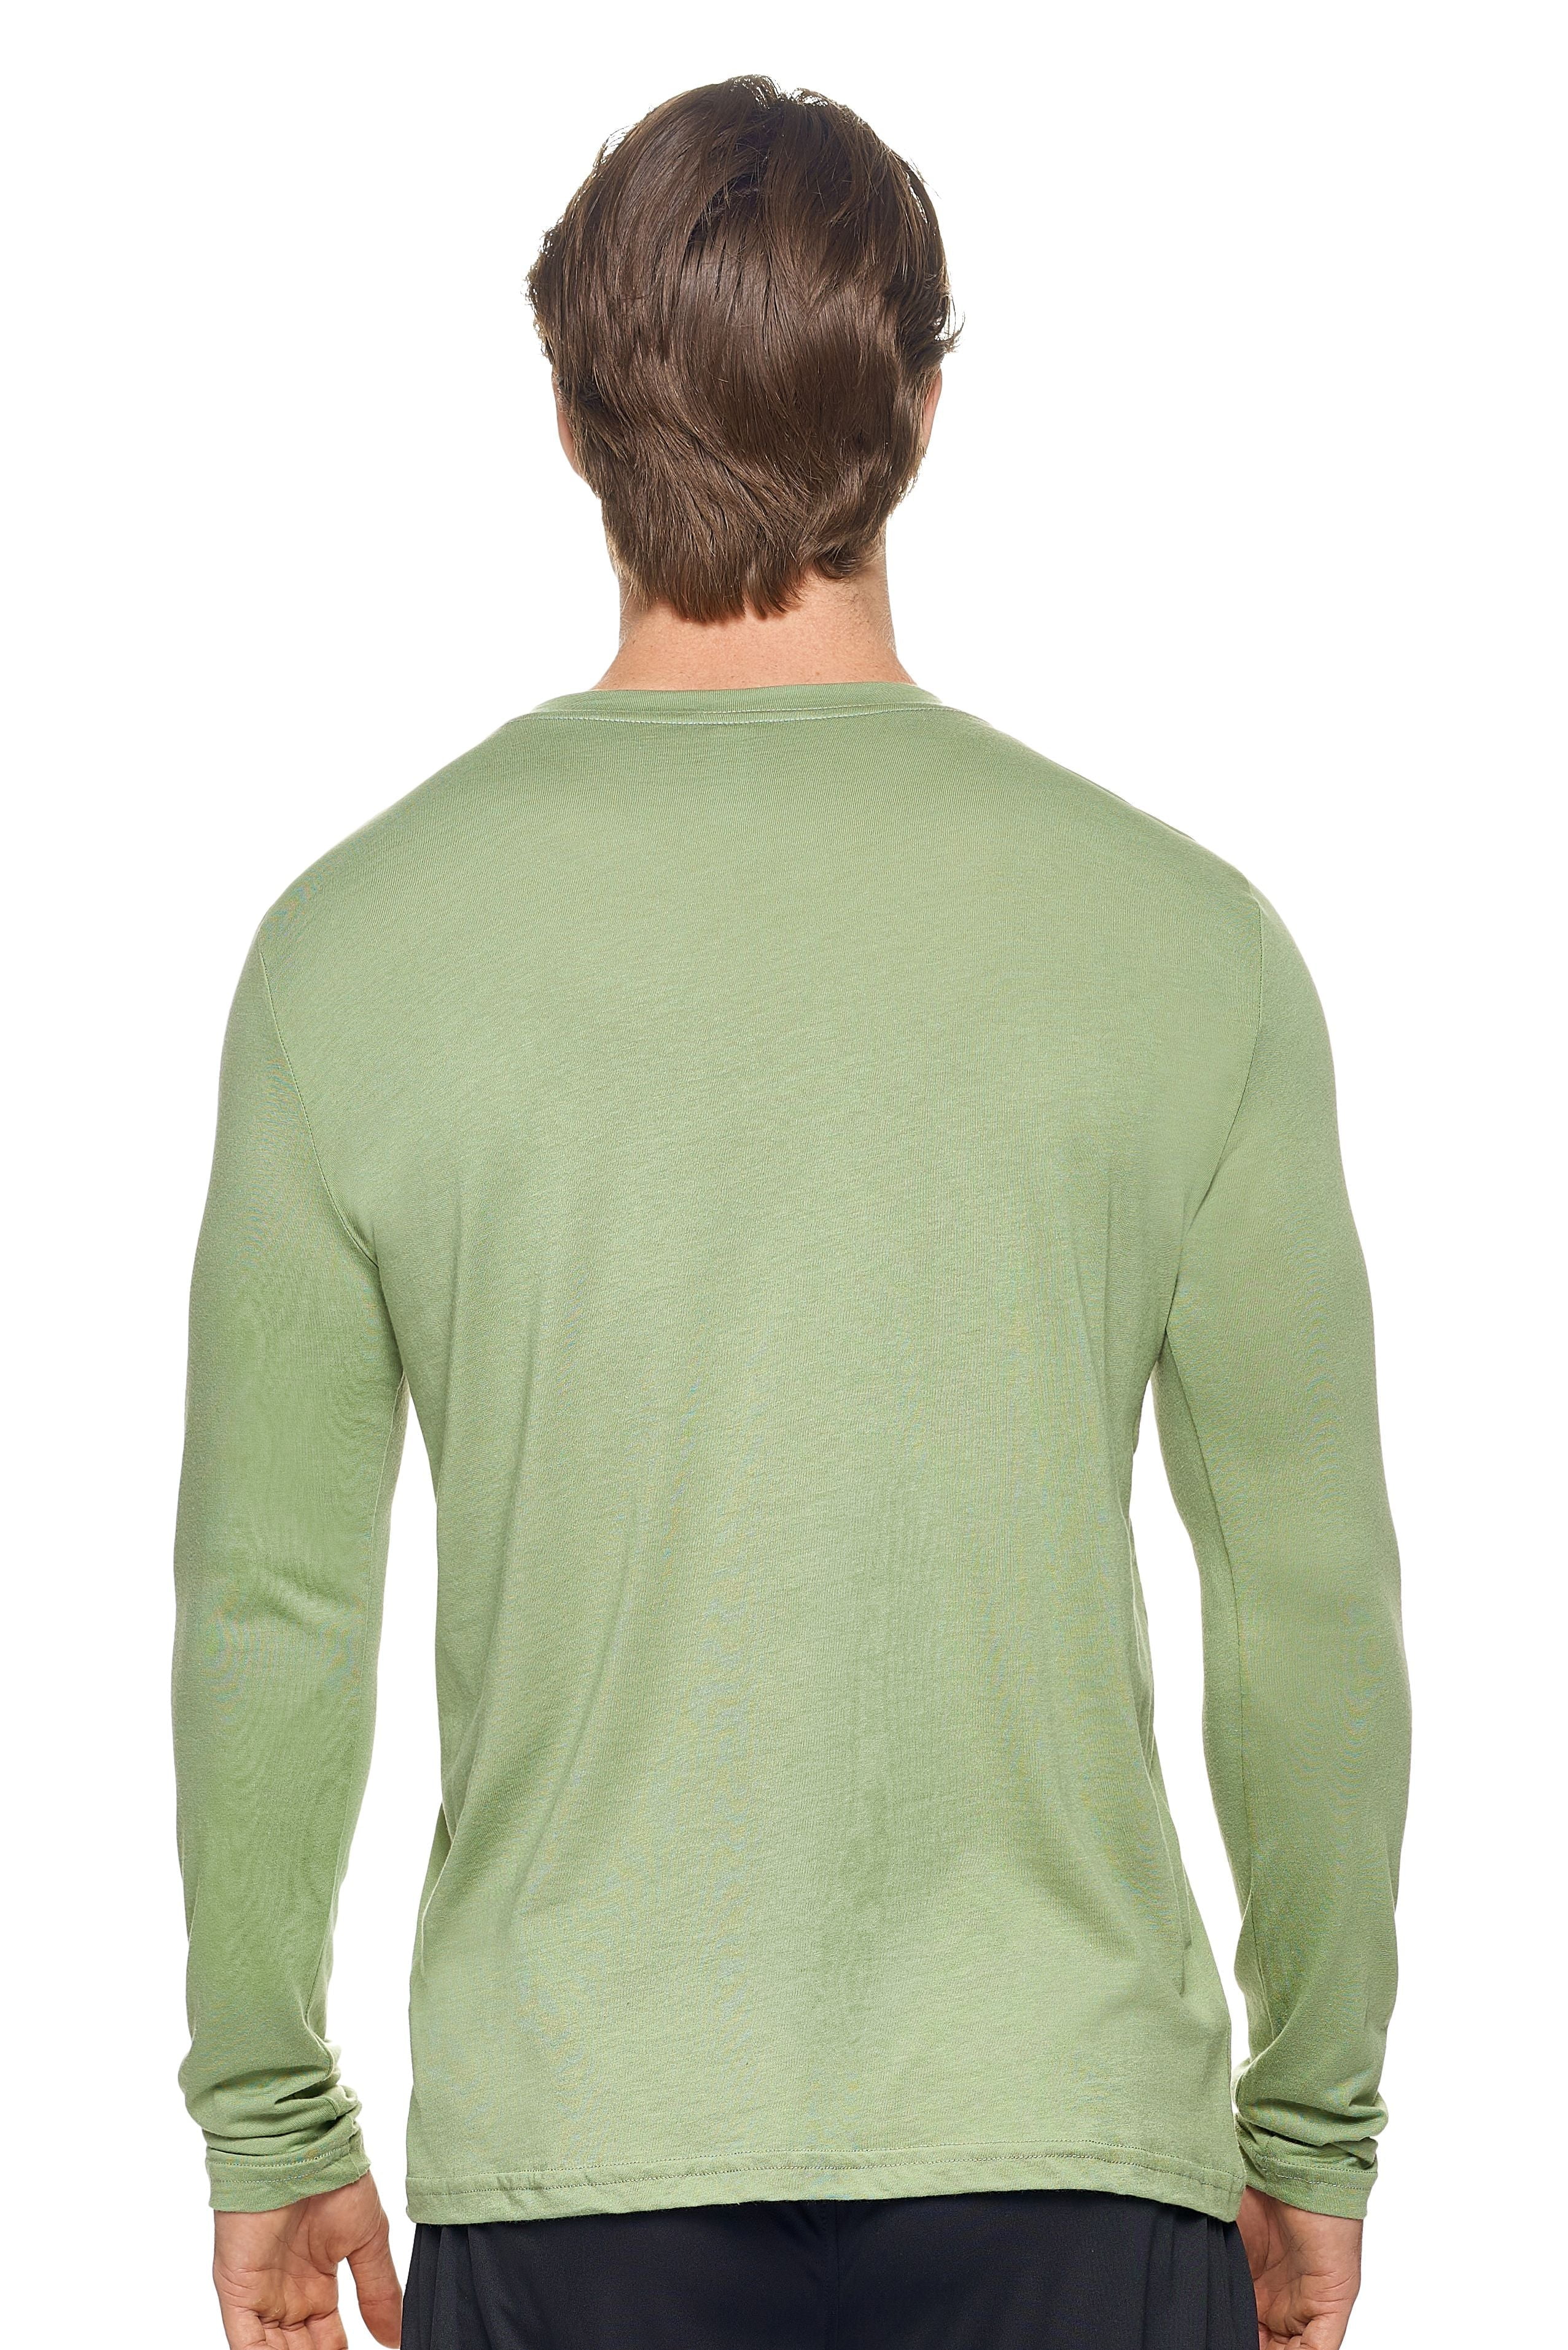 Expert Brand Eco-Friendly MoCA™ V-Neck Long Sleeve Shirt for Men